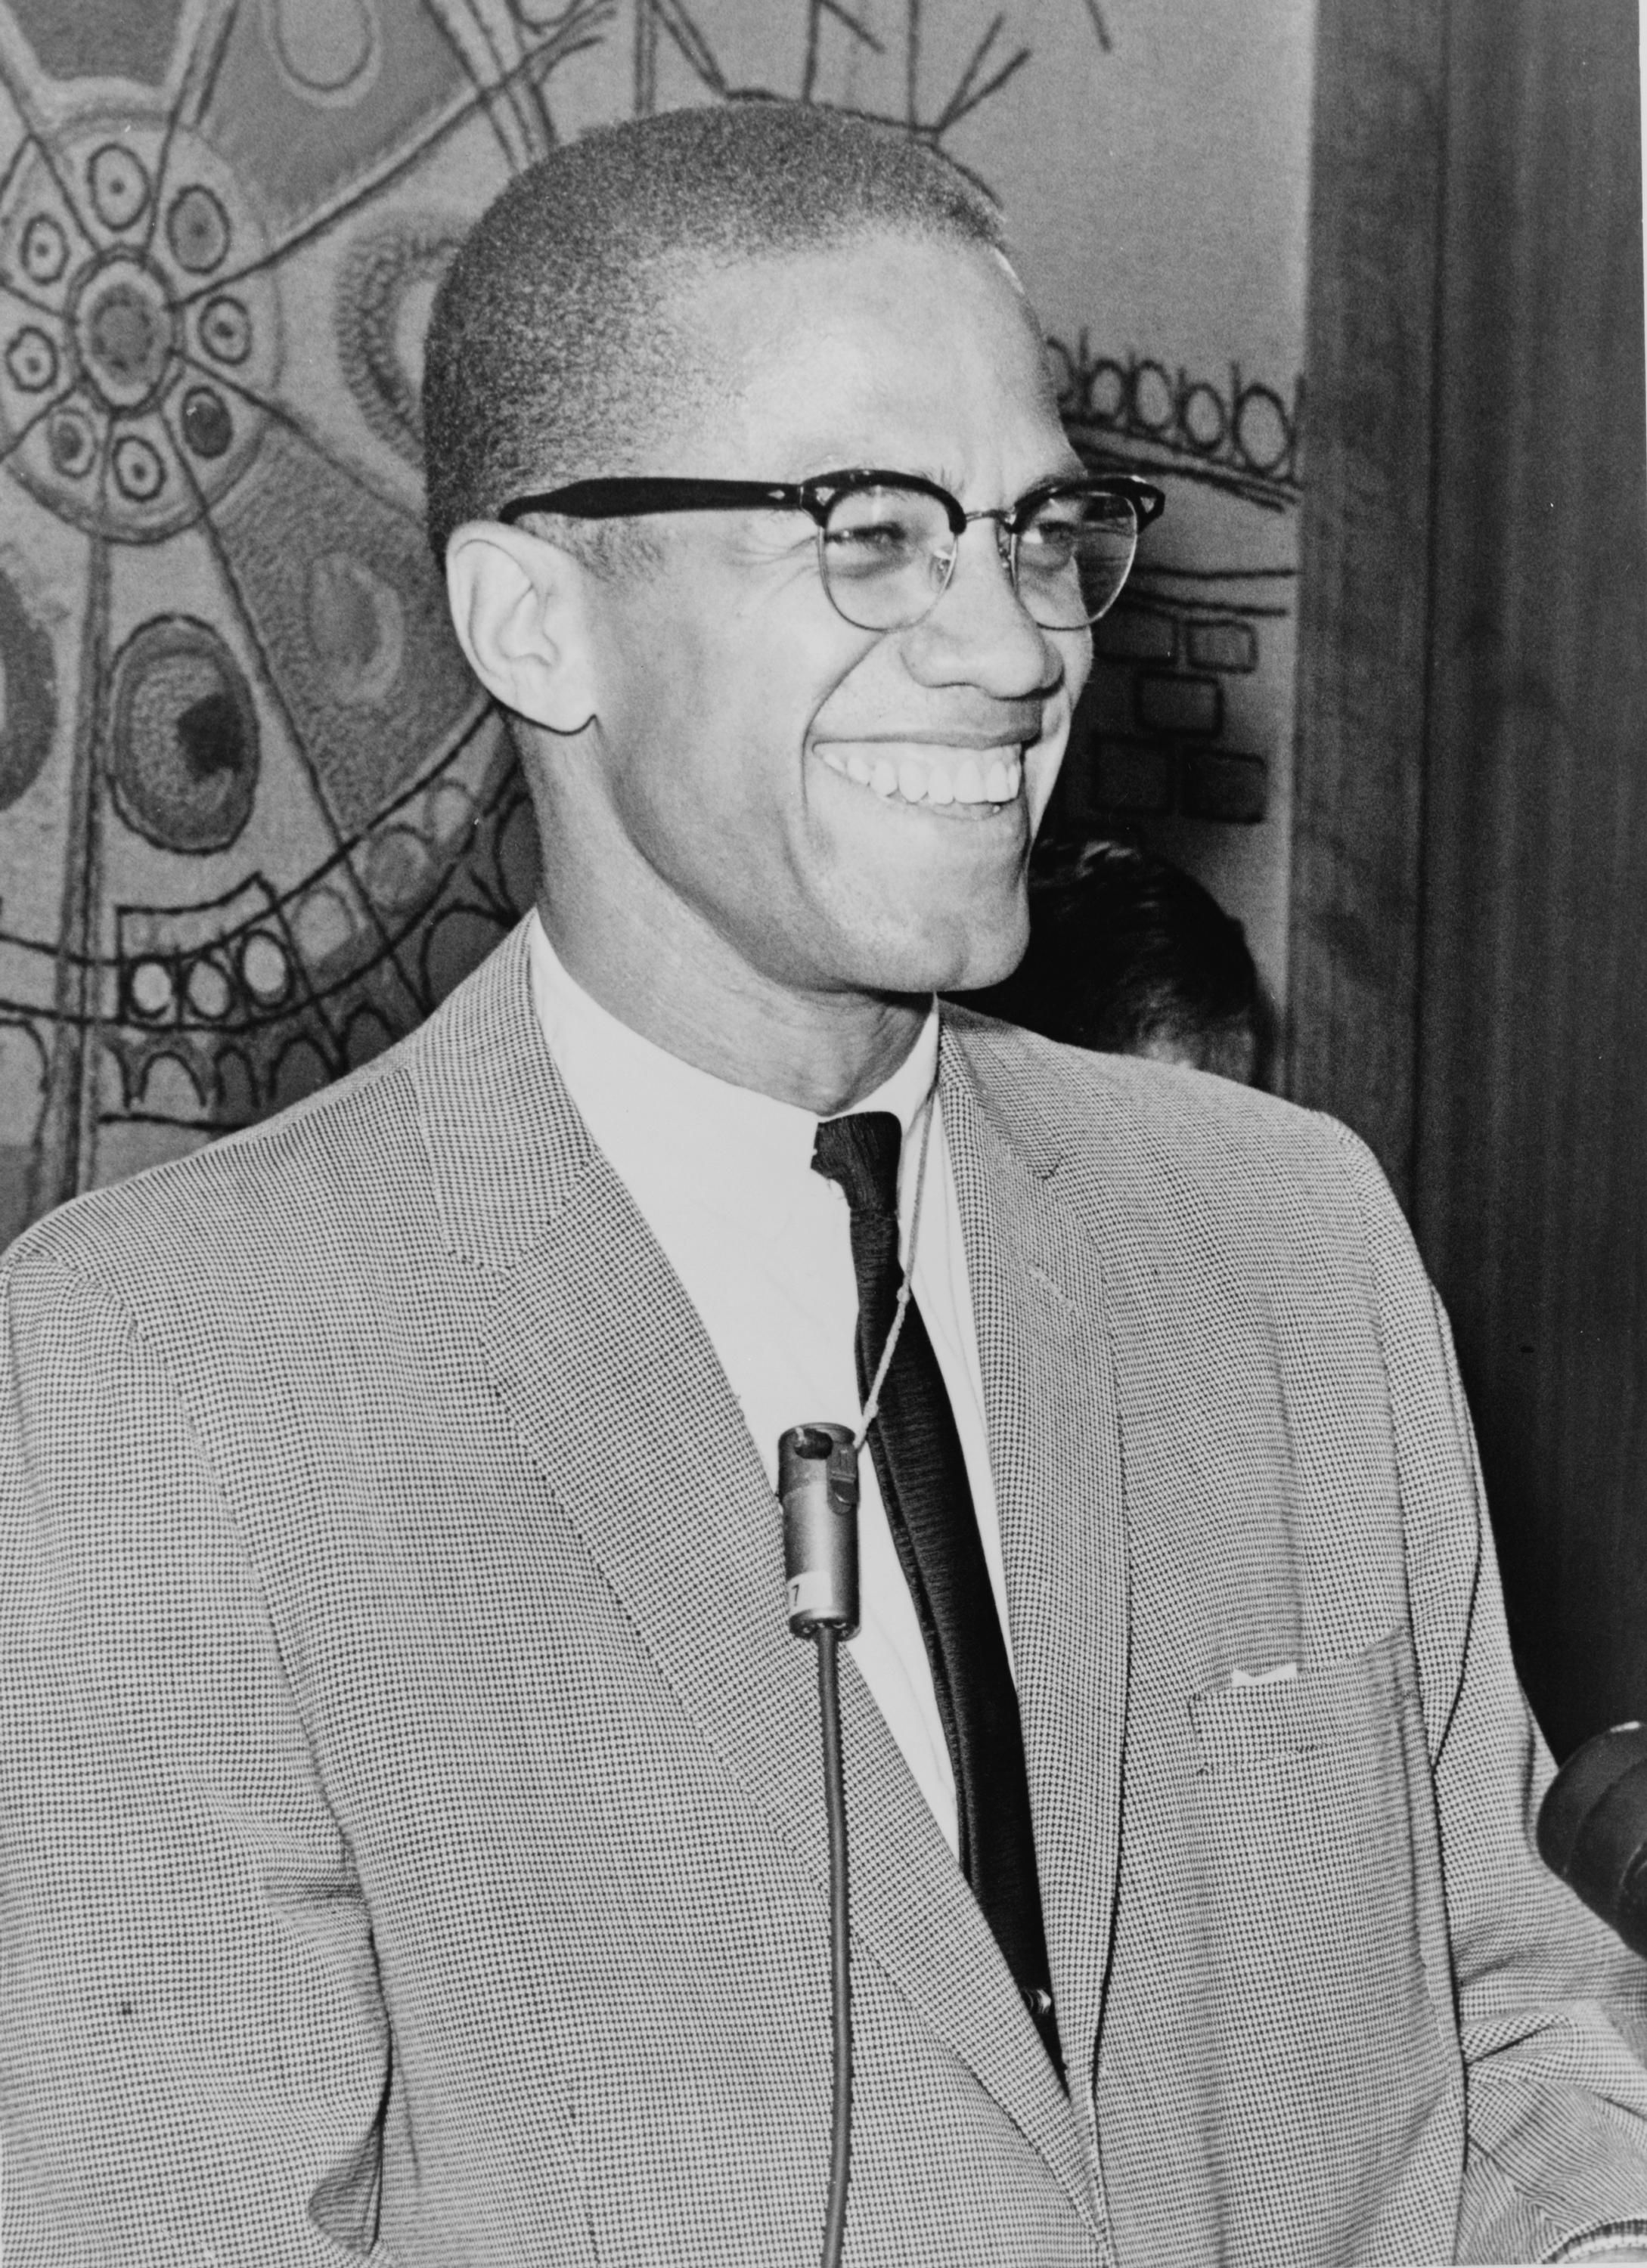 Portrait of Malcolm X